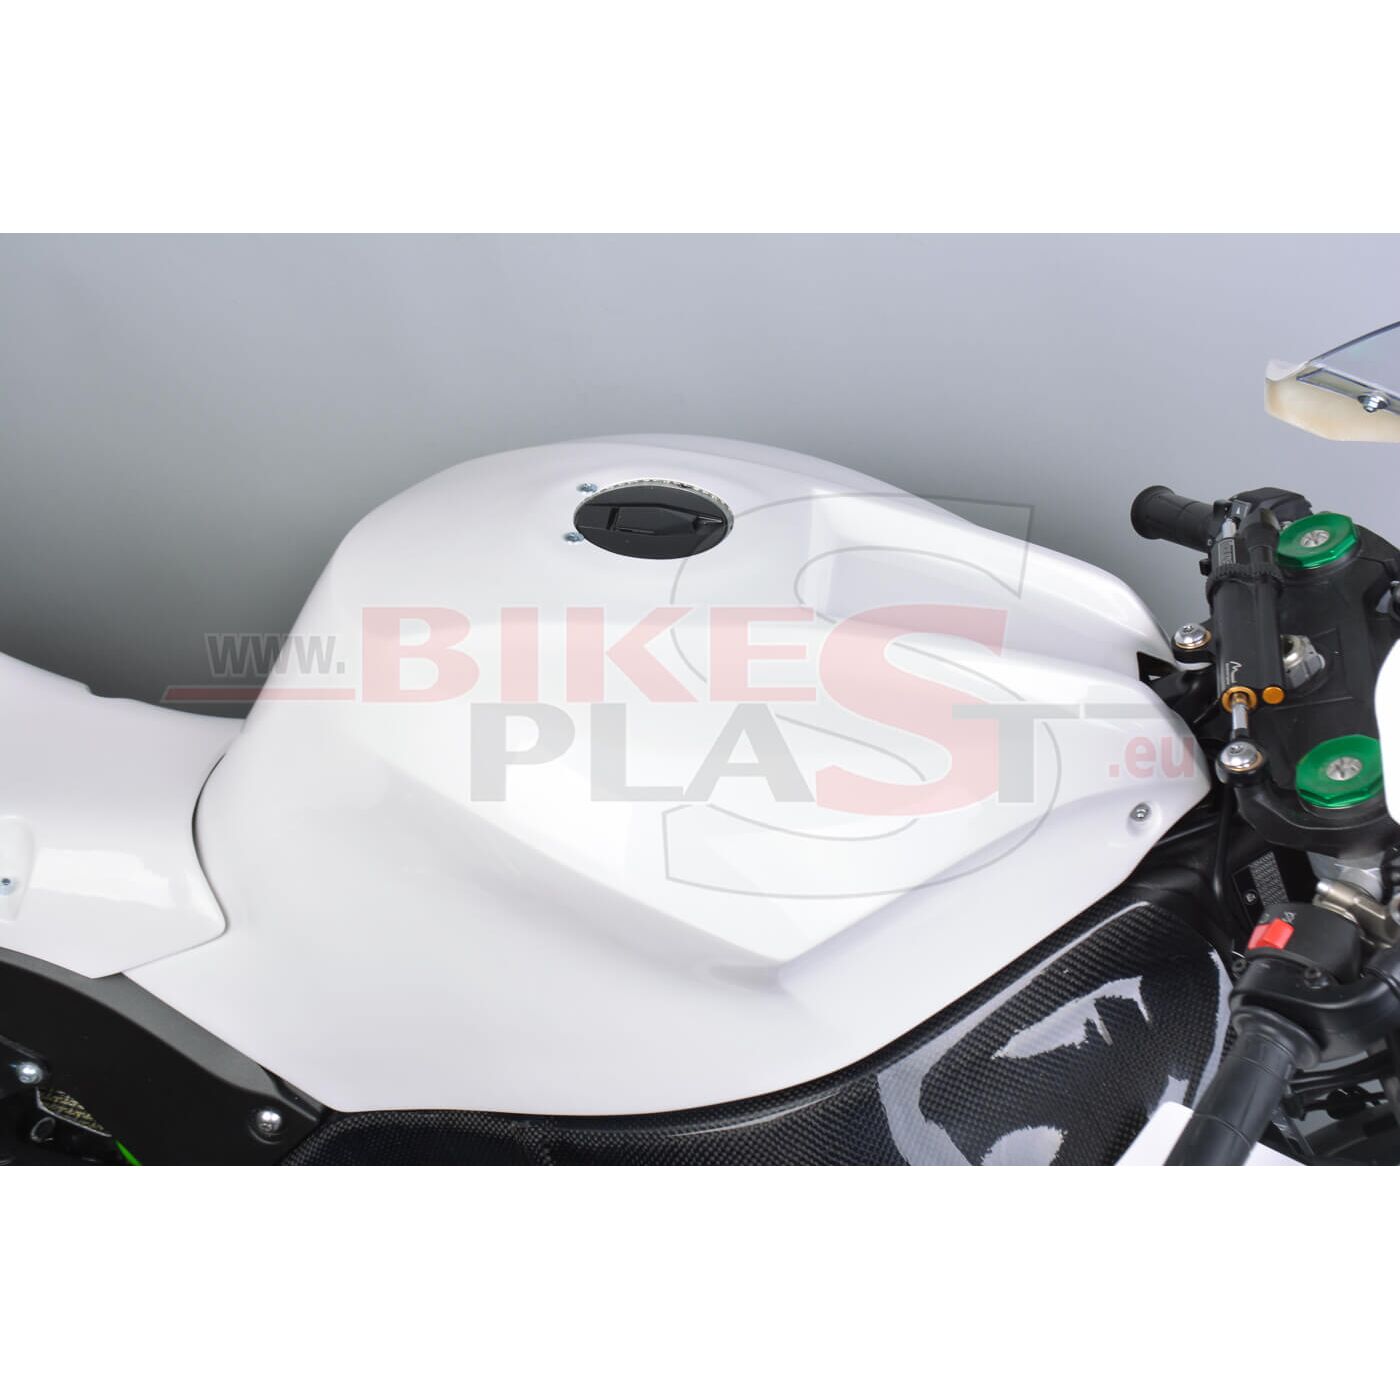 Parts :: Kawasaki :: Ninja ZX10R :: Race Stay Bodywork :: BikesPlast Kawasaki ZX10R Fuel Tank Cover (2016 & Up) - HSBK Racing | Race Team | Training Facility | Exotic Parts | Italian Bikes